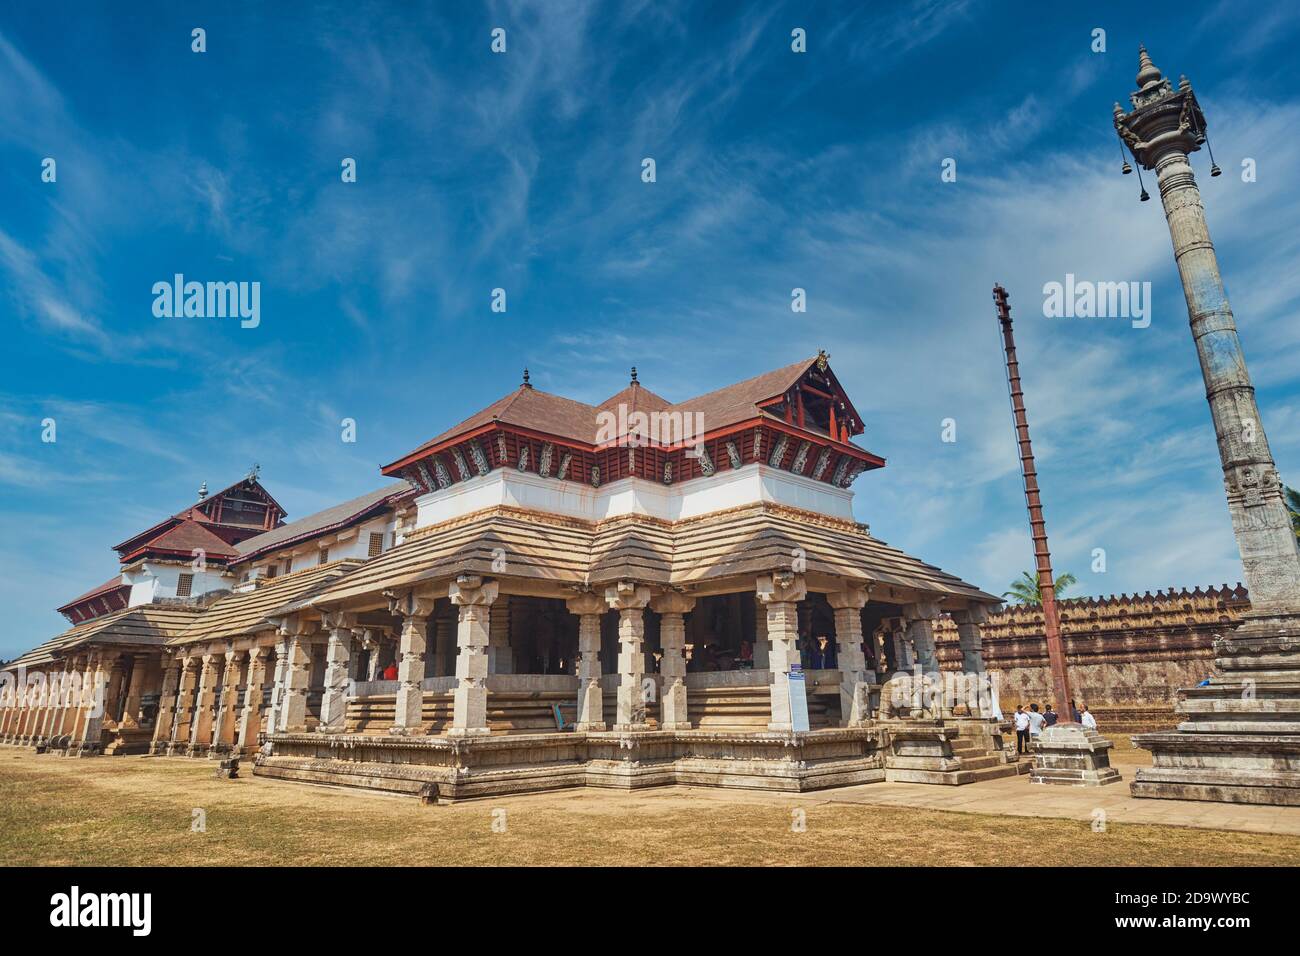 The Thousand Pillar Temple or Saavira Kambada Basadi, a Jain temple in Moodabidri (Mudabidri), near Mangalore (Mangaluru), Karnataka, South India Stock Photo